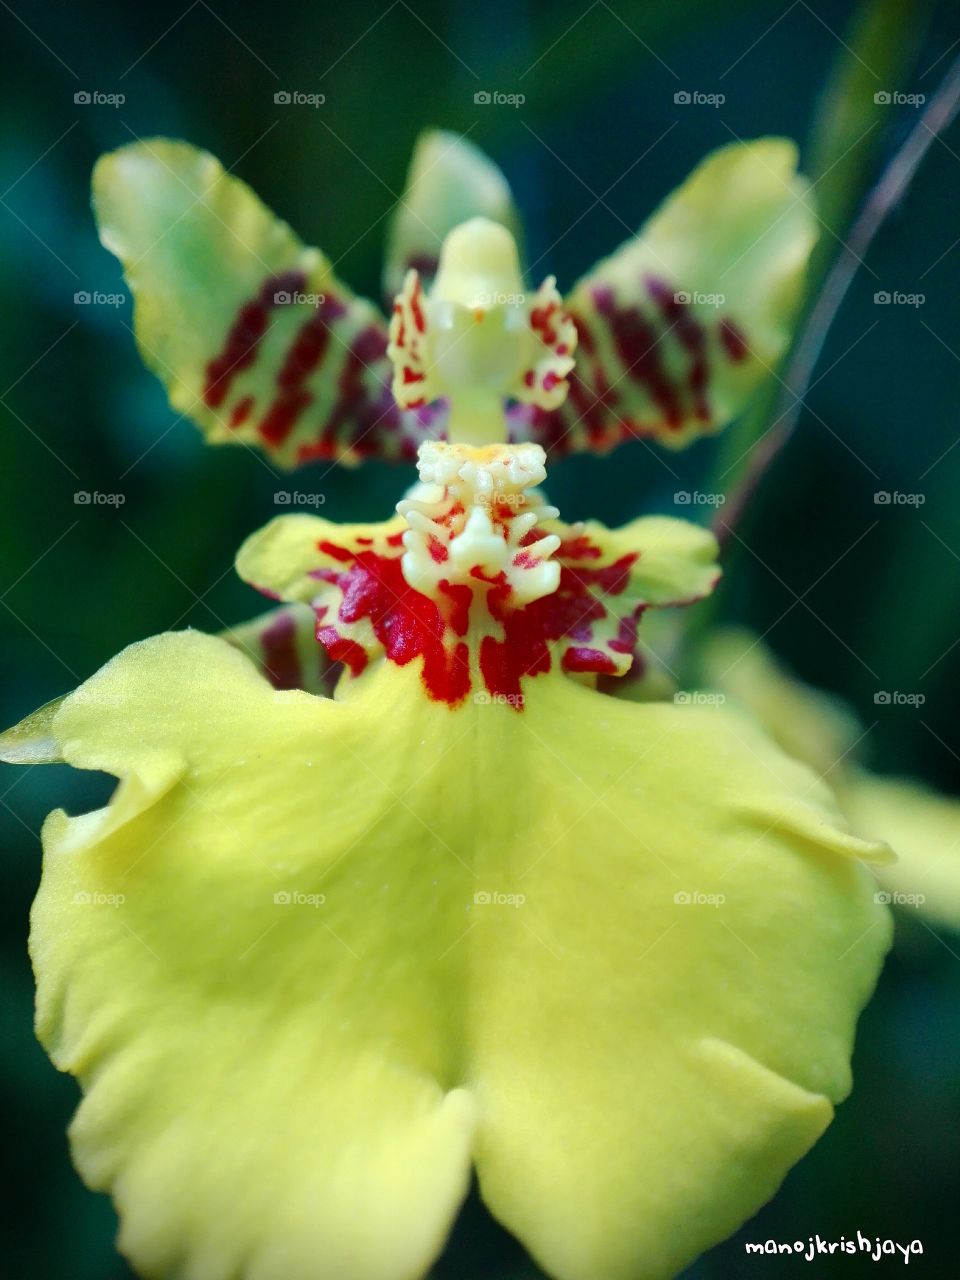 The Kandy Dancer flower